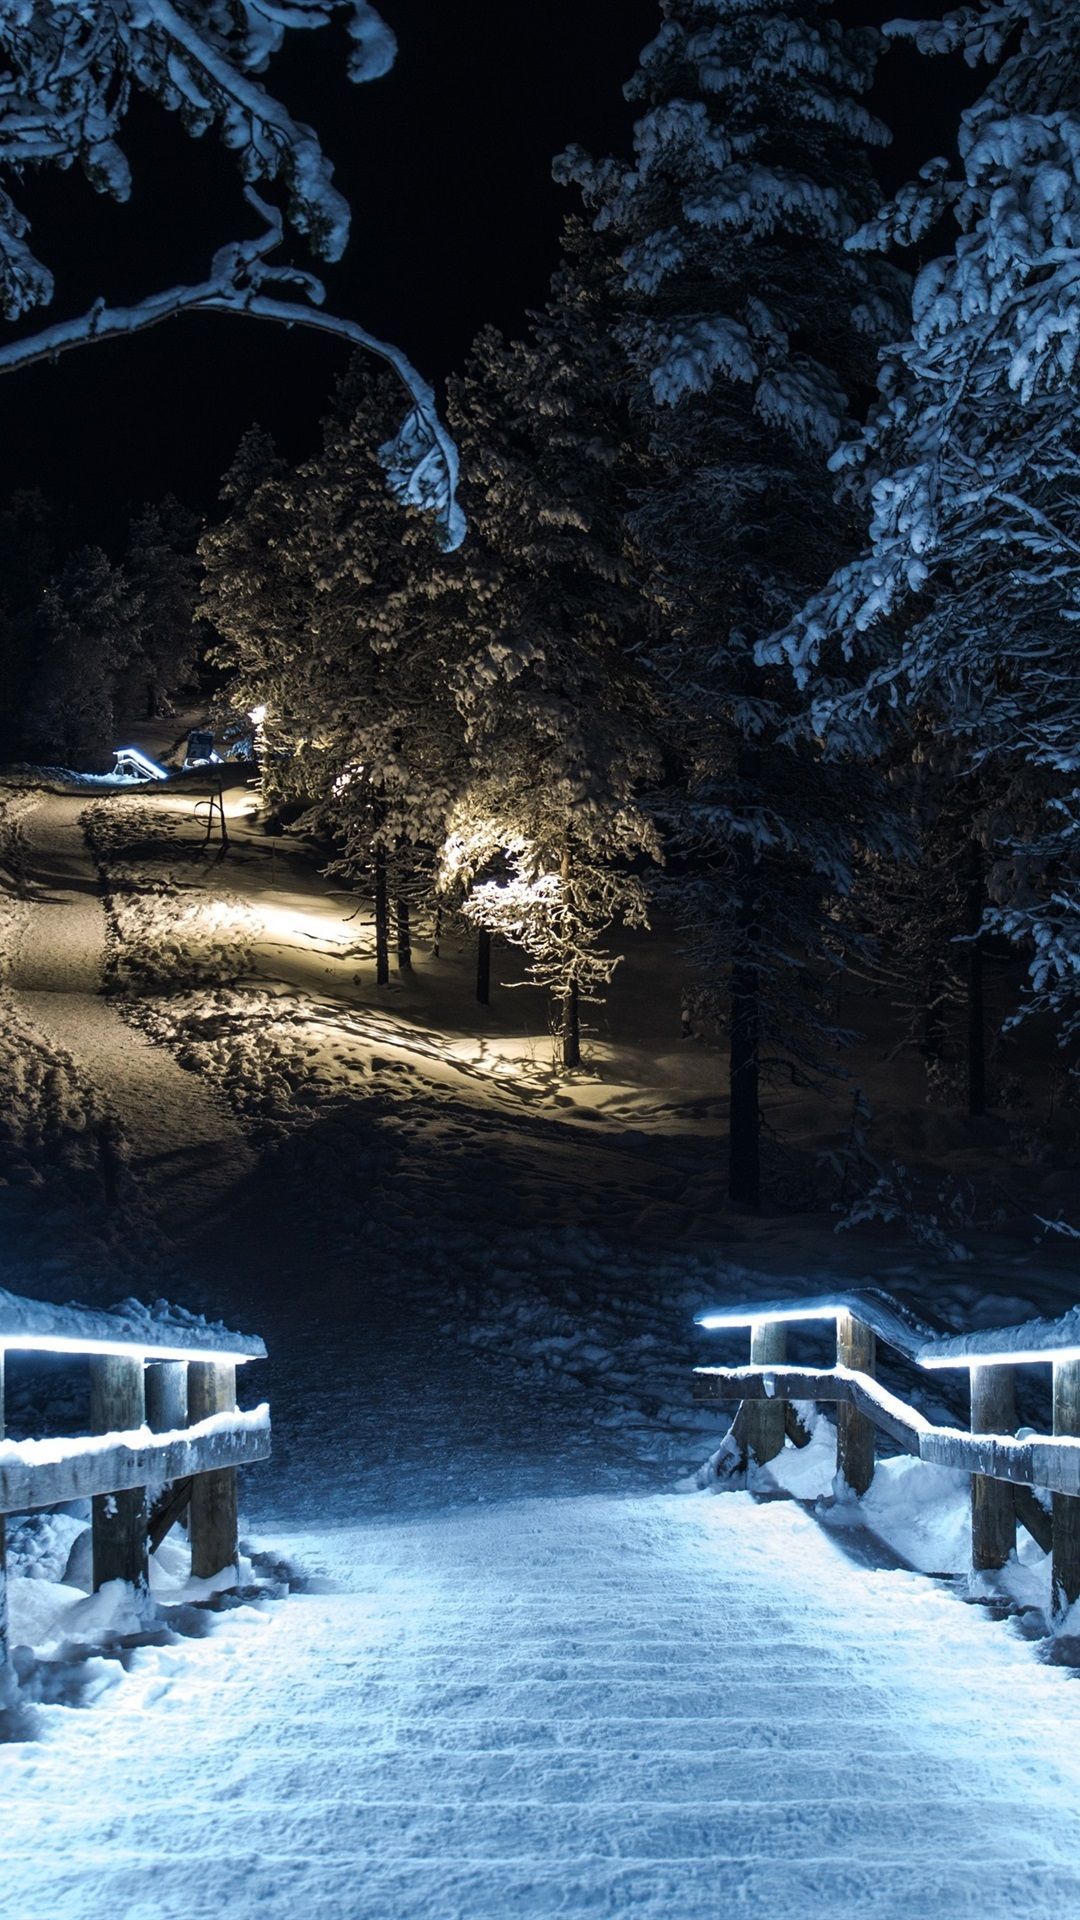 Night Snow Wallpaper Ios. Winter scenes, Winter wonder, Winter trees